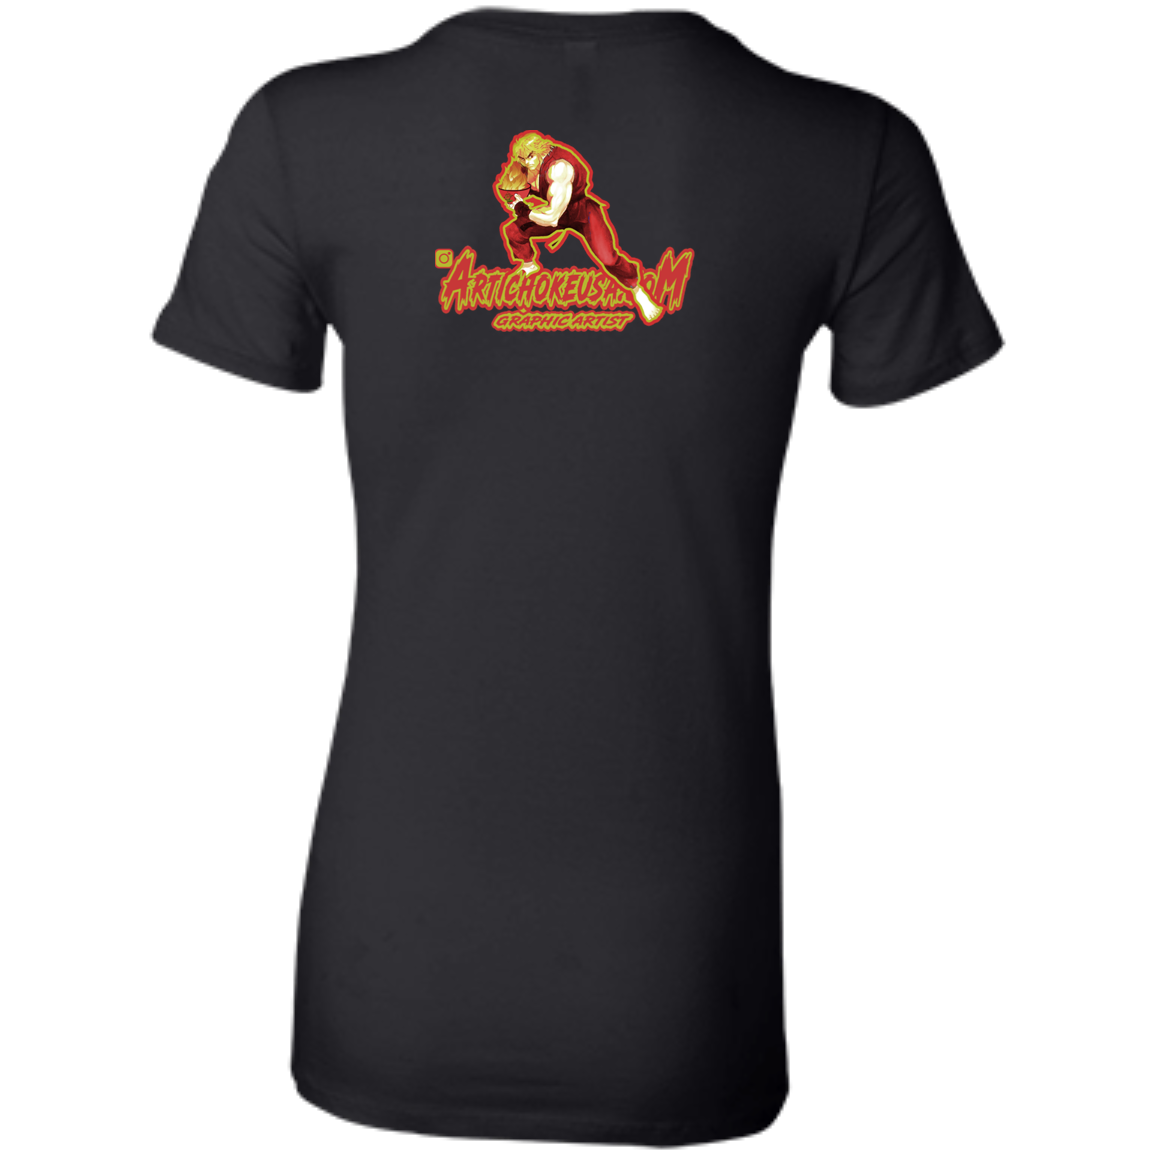 ArtichokeUSA Custom Design. Pho Ken Artichoke. Street Fighter Parody. Gaming. Ladies' Favorite T-Shirt